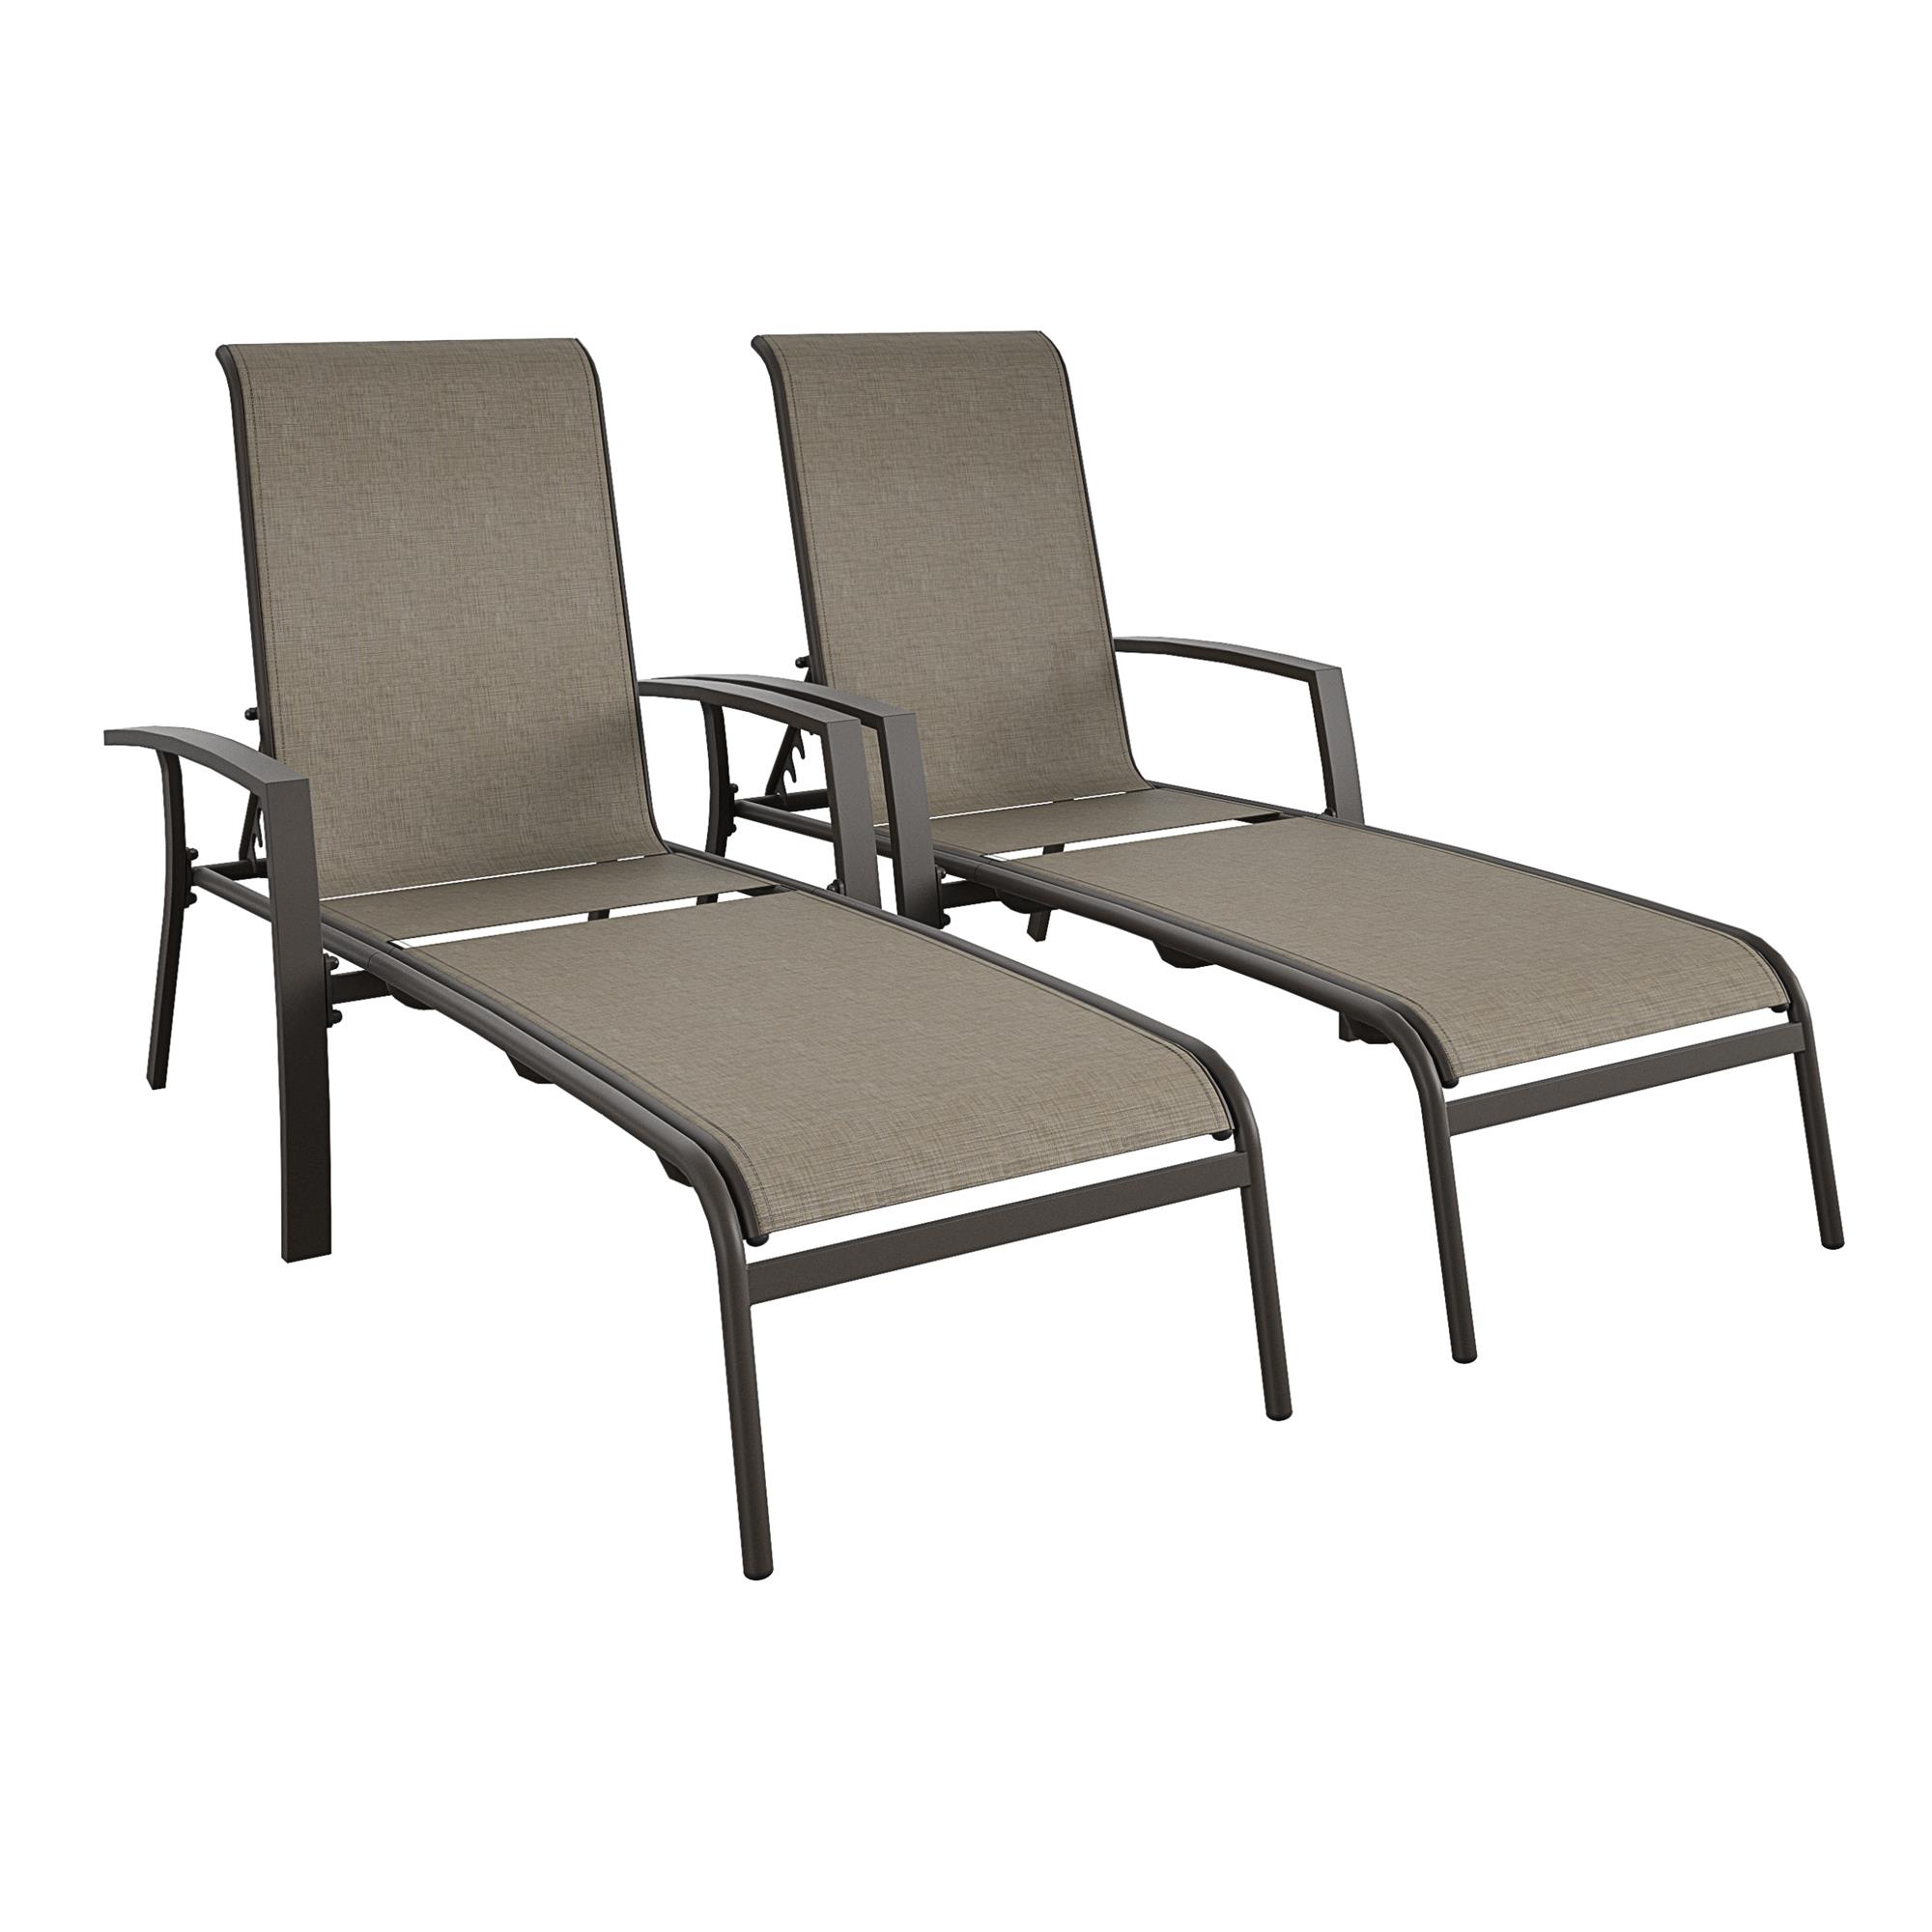 Serene Ridge Aluminum Chaise Lounge, 2pk - image 2 of 10